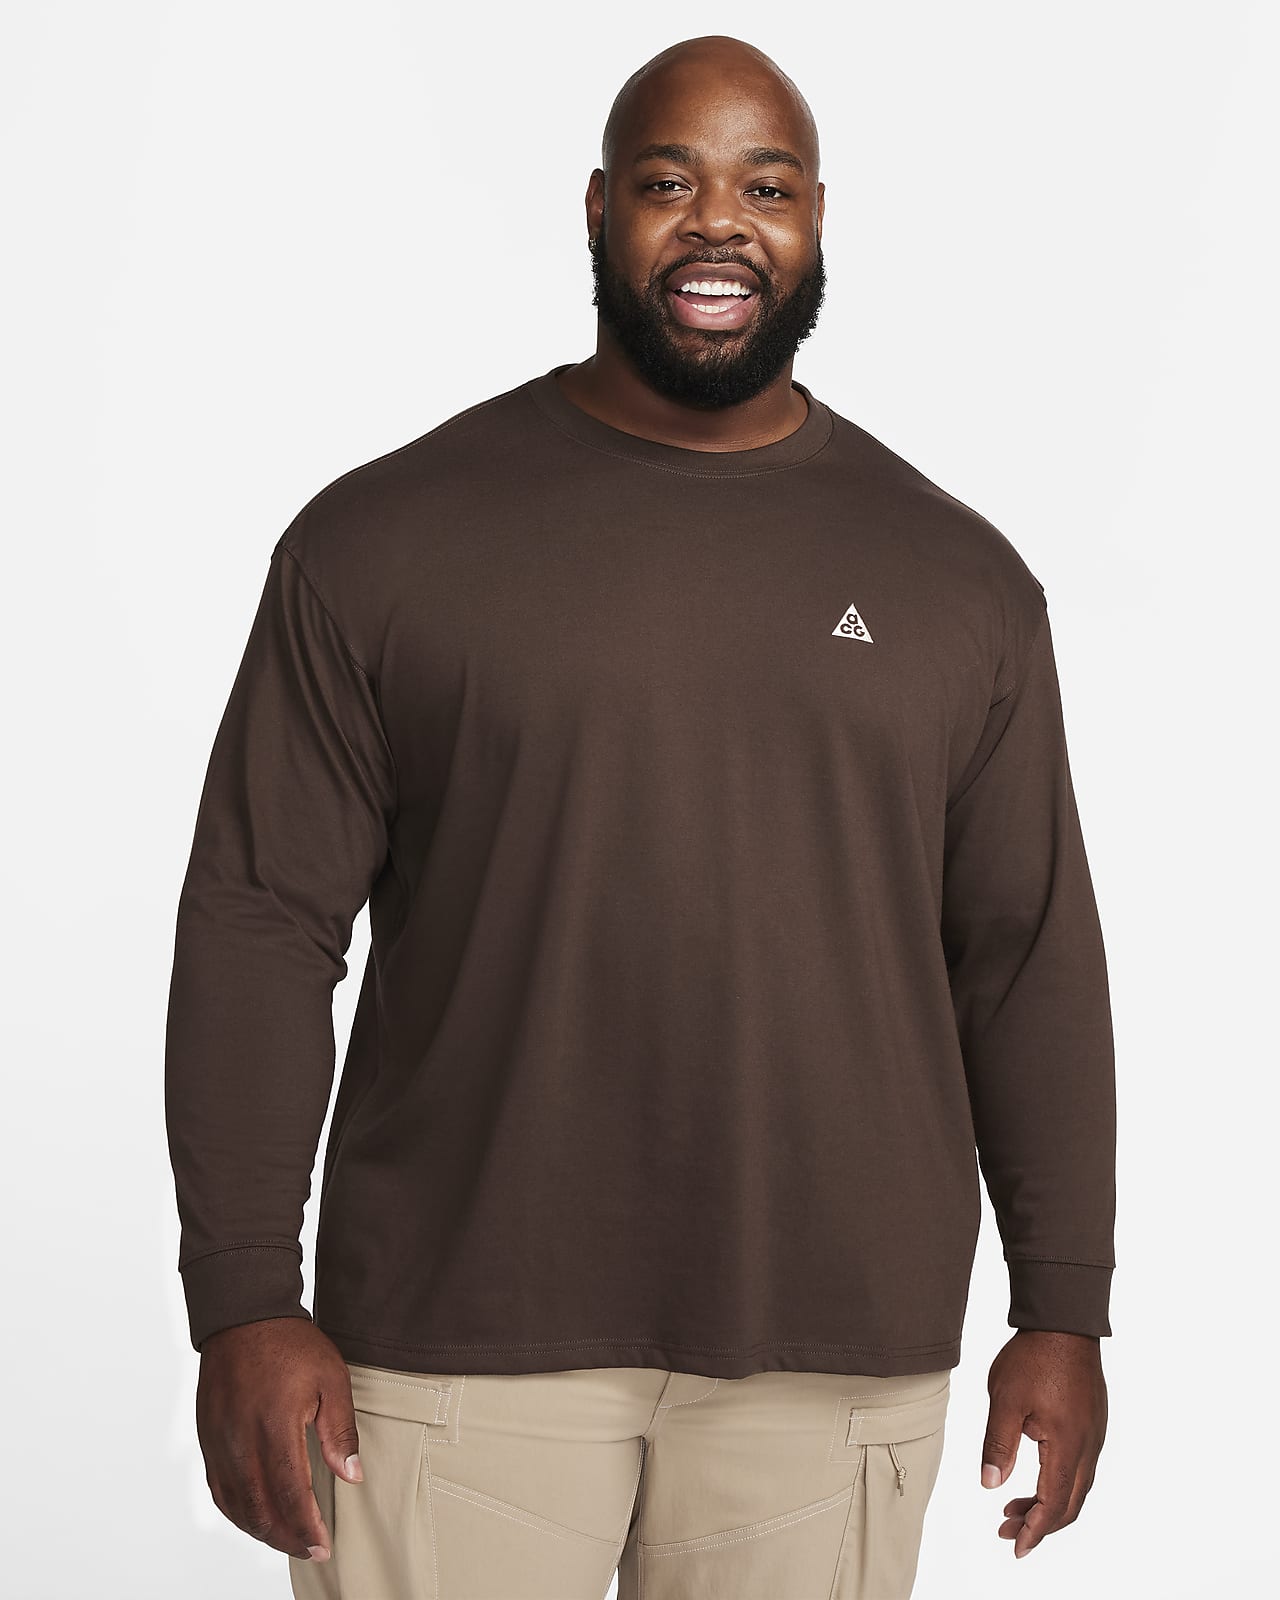 Nike ACG Men's Long-Sleeve T-Shirt.